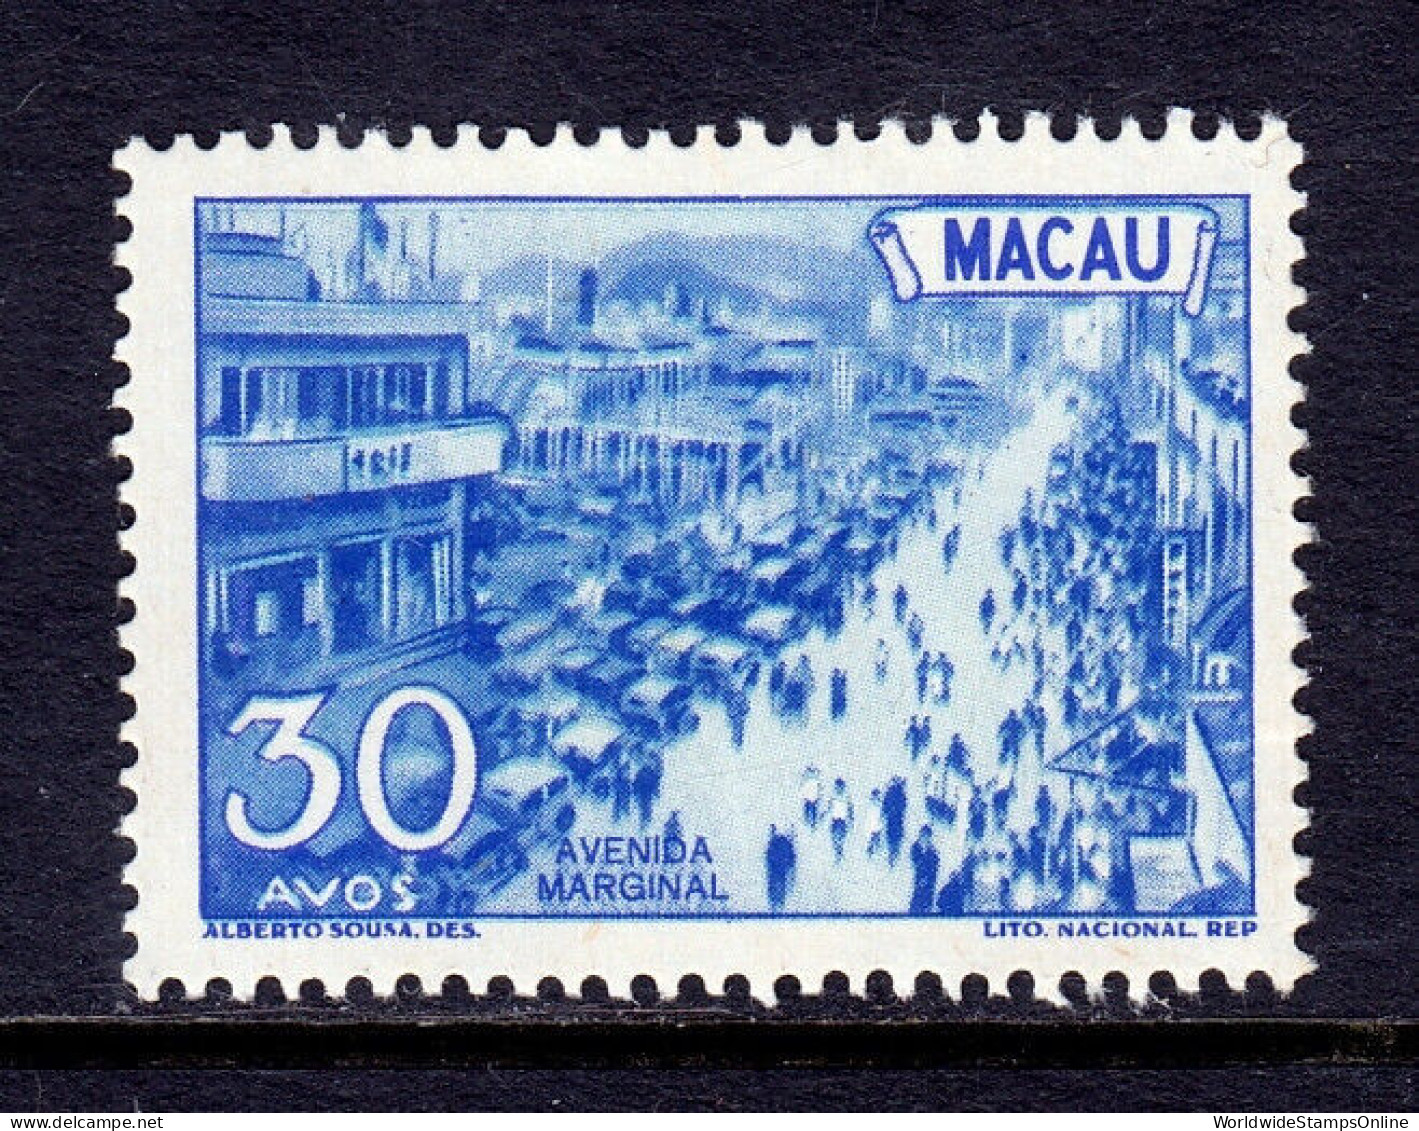 MACAO — SCOTT 346 —  1950 30a MARGINAL AVE PICTORIAL — MH — SCV $28 - Nuevos